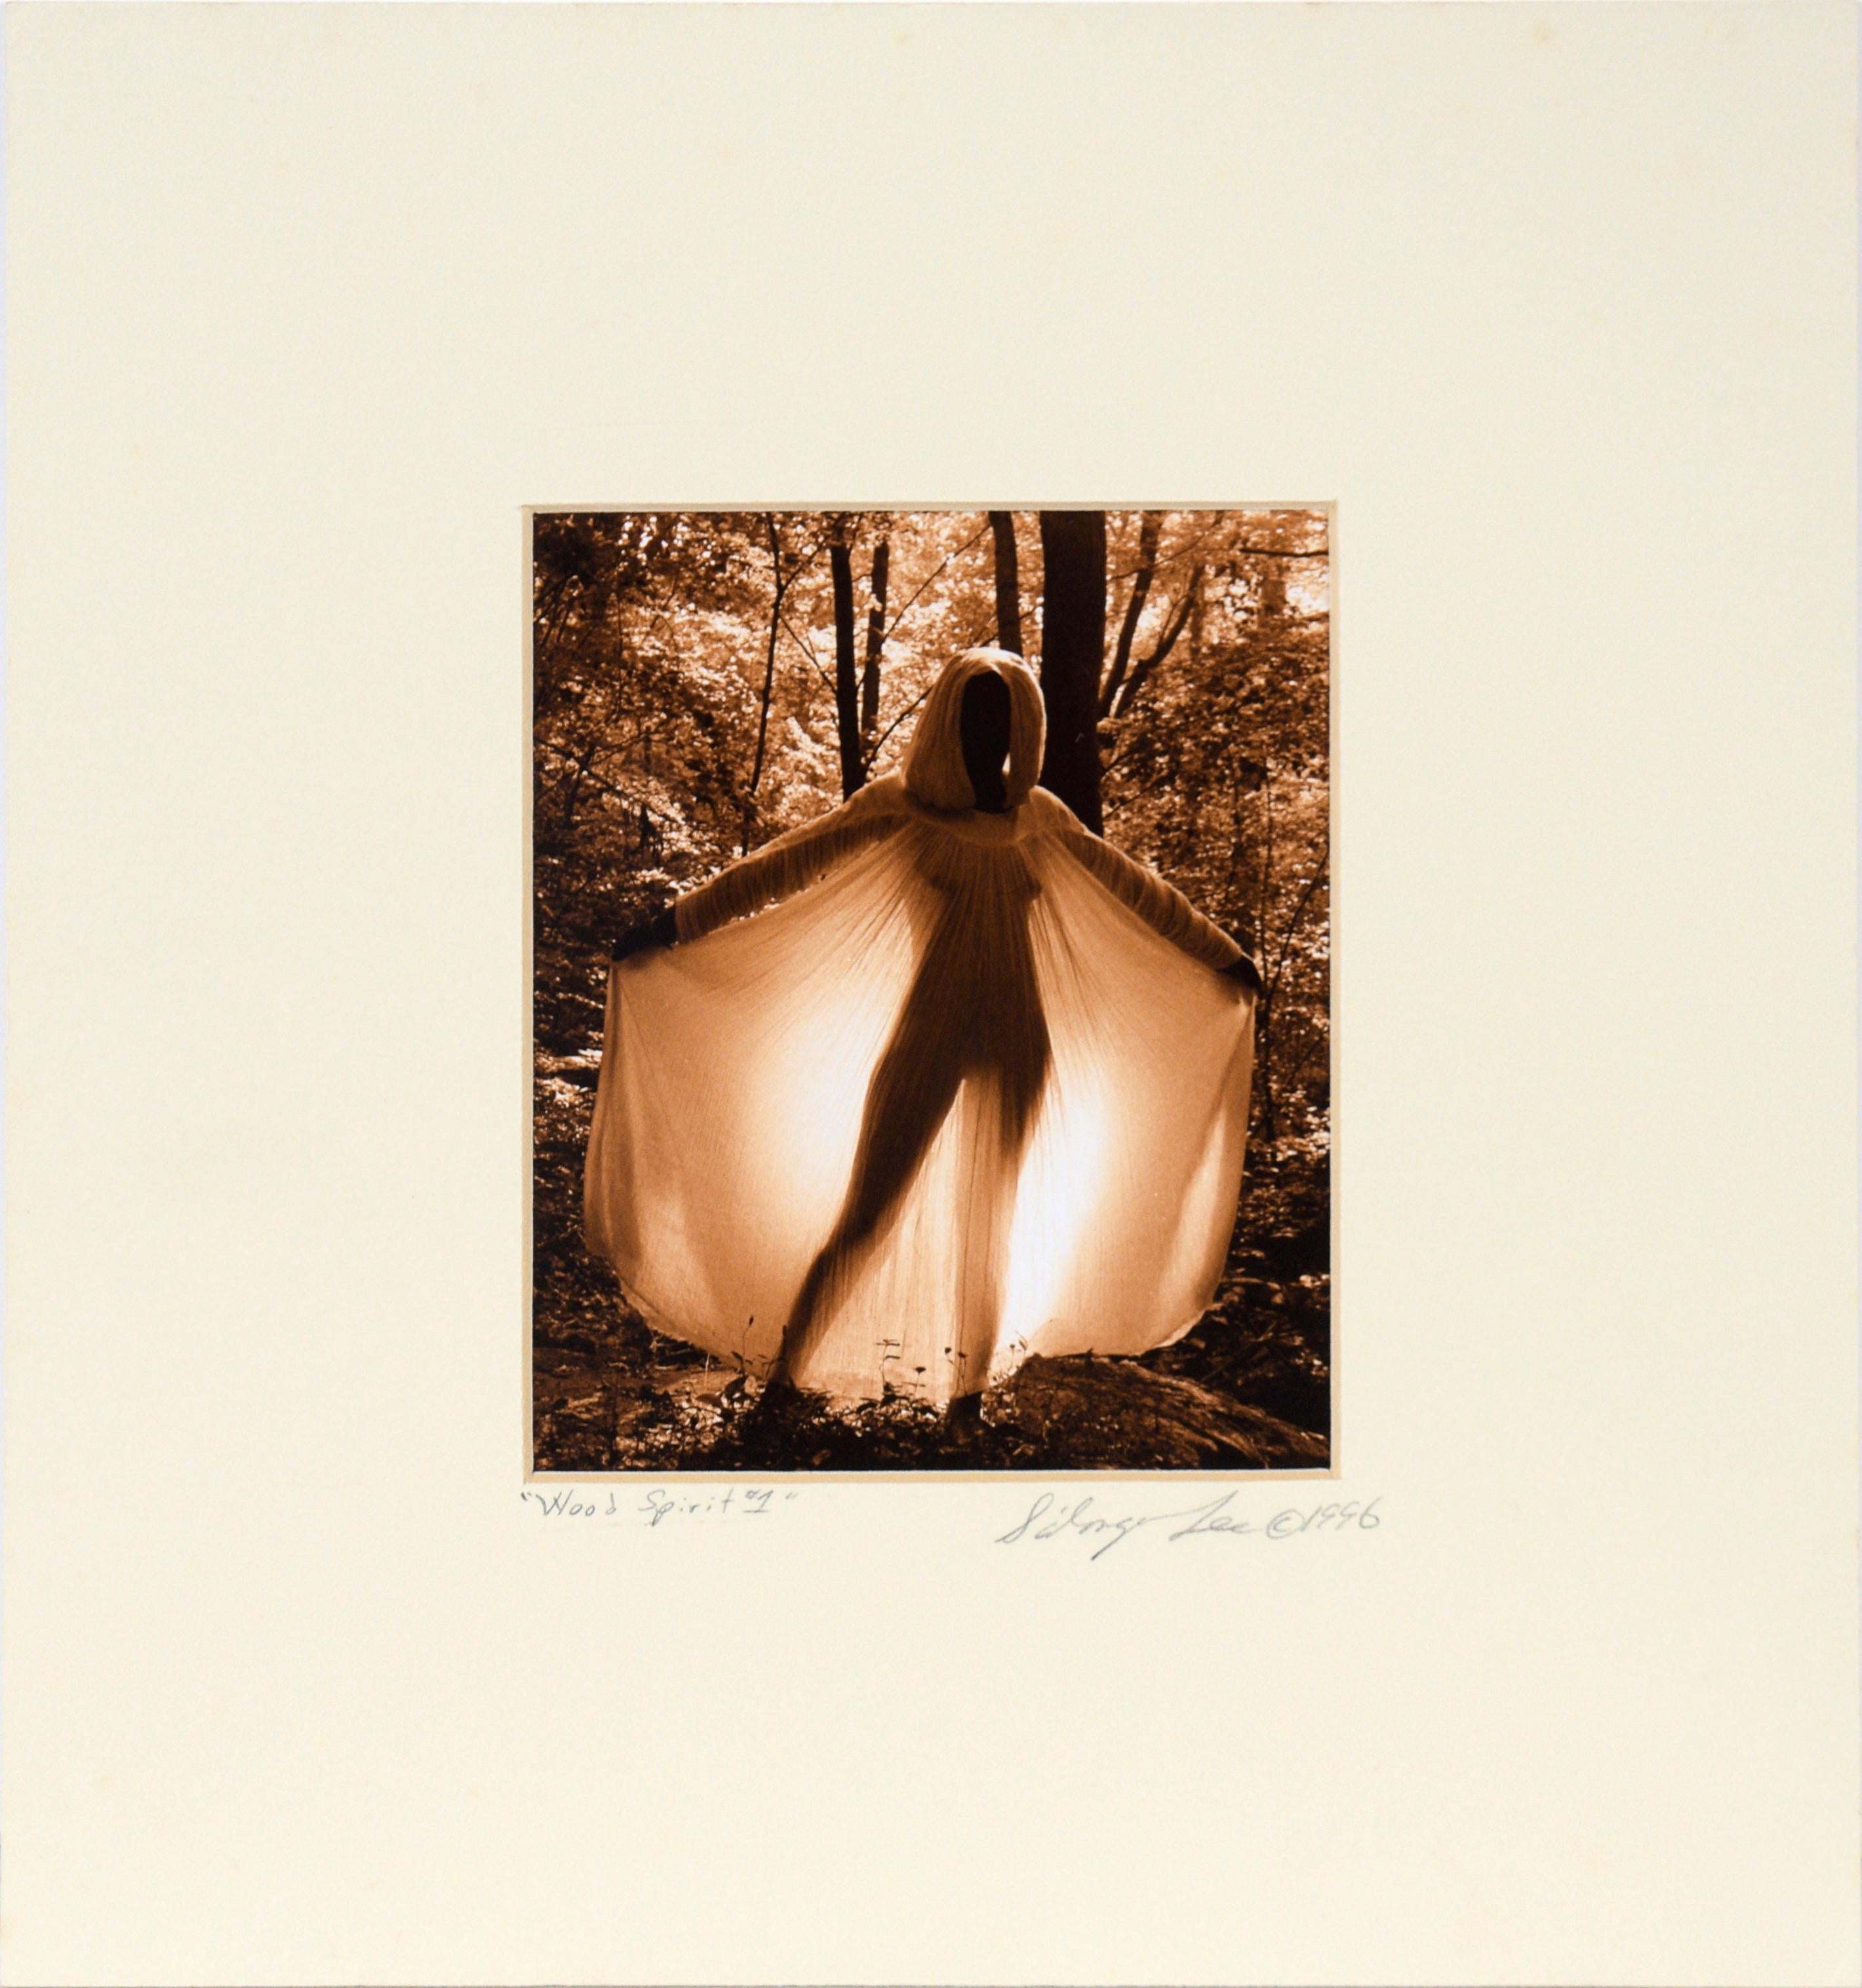 Sailong Lee Nude Photograph - "Wood Spirit #1" - Figurative Sepia Toned Photography